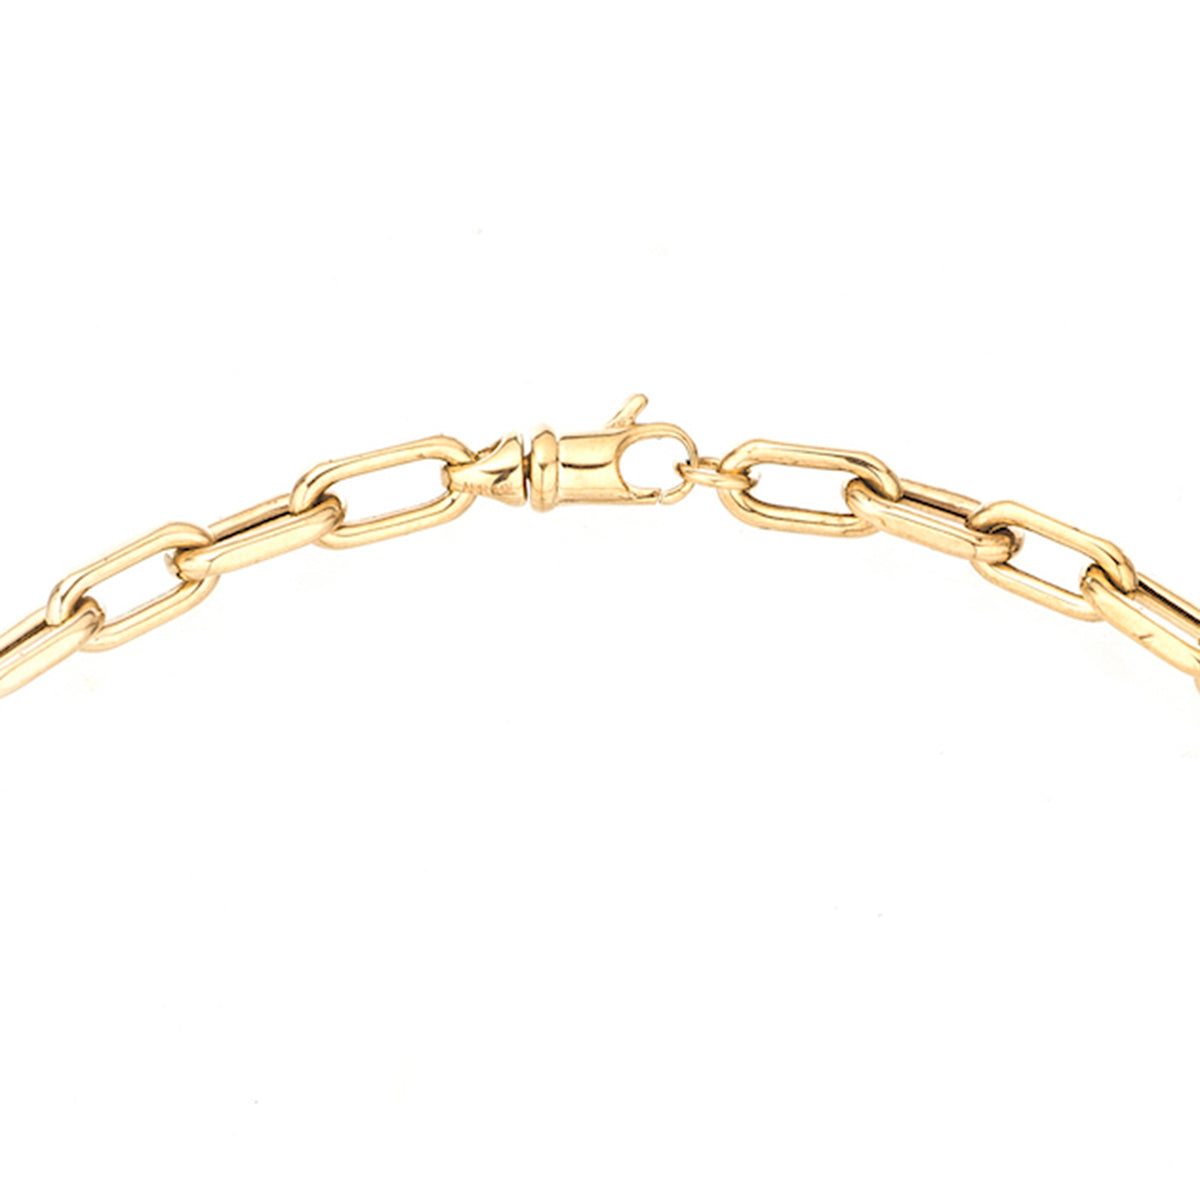 5.3mm Groovy Italian Chain Initial Necklace - Adina Reyter